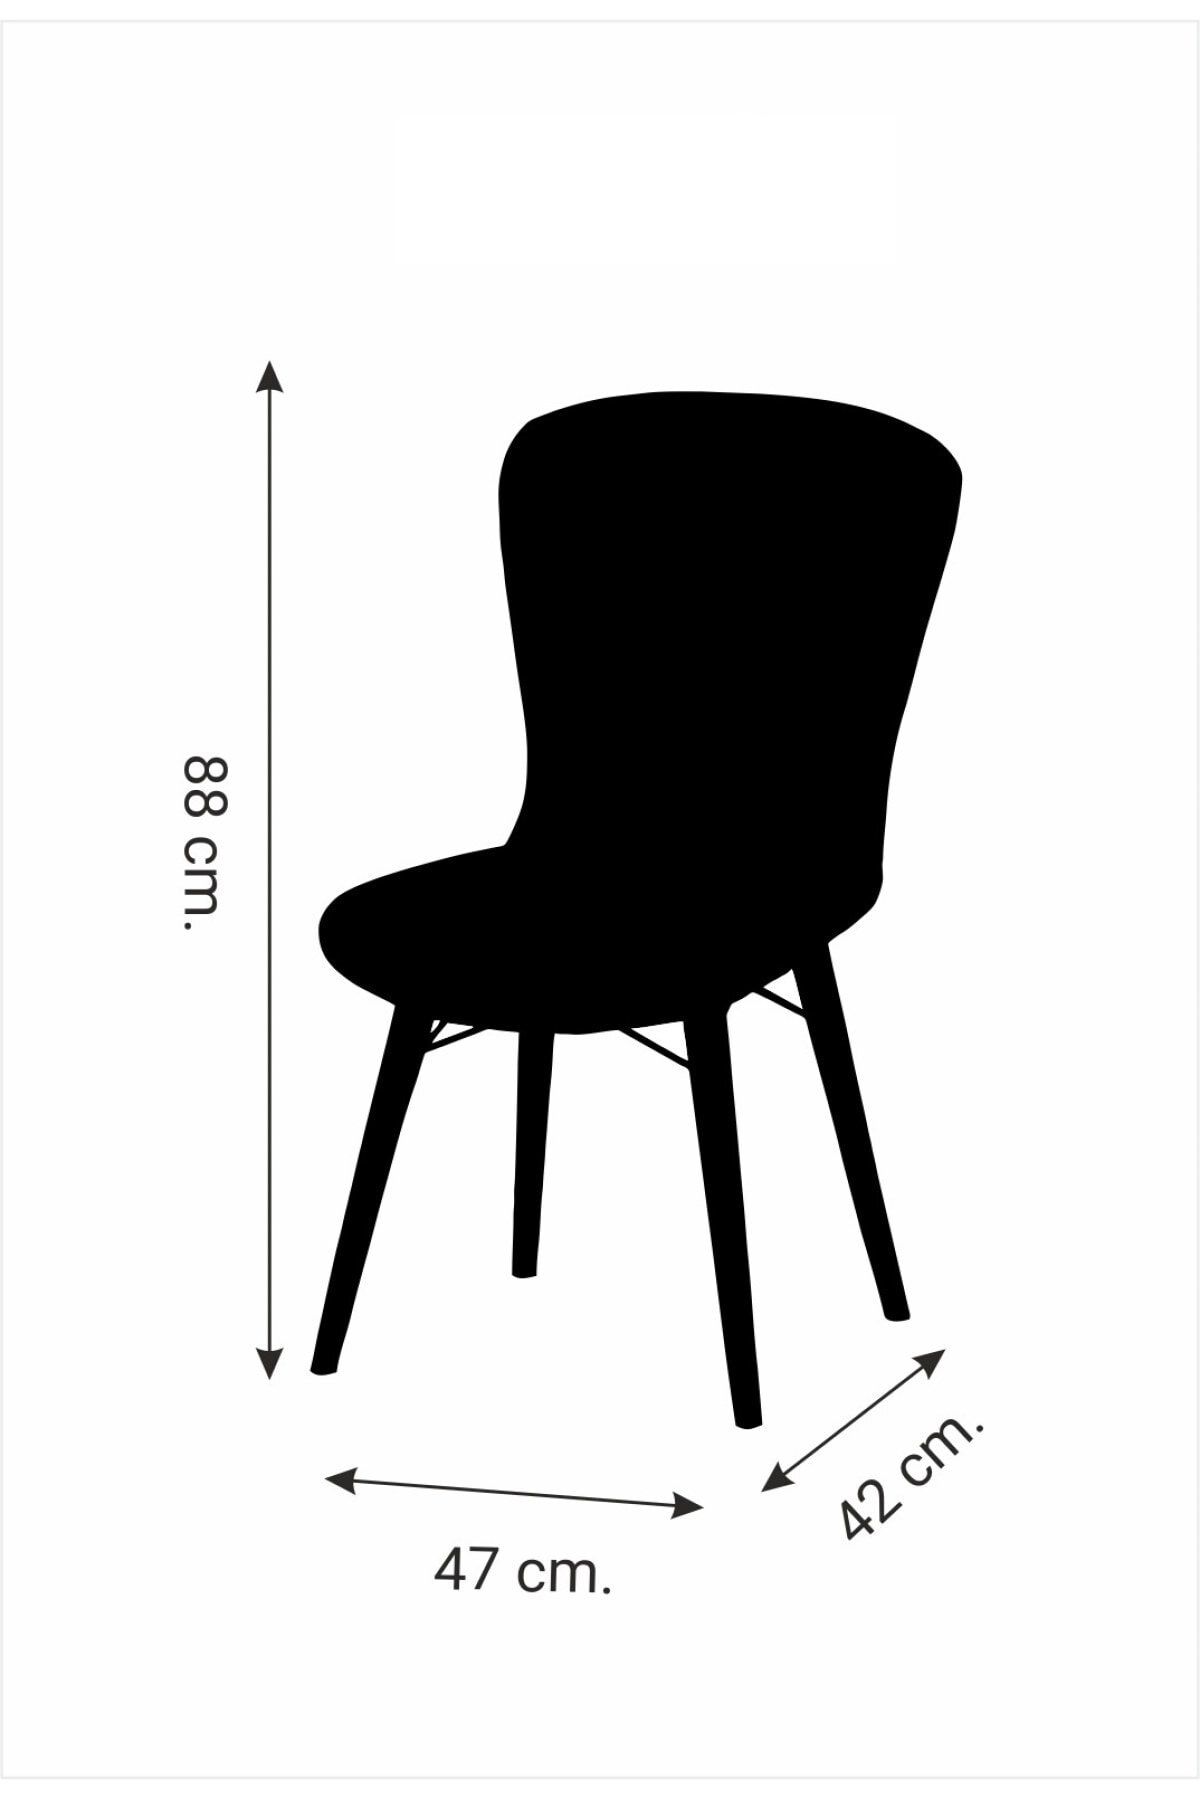 Set masa extensibila cu 6 scaune tapitate Homs cristal nuc-maro 170 x 80 cm